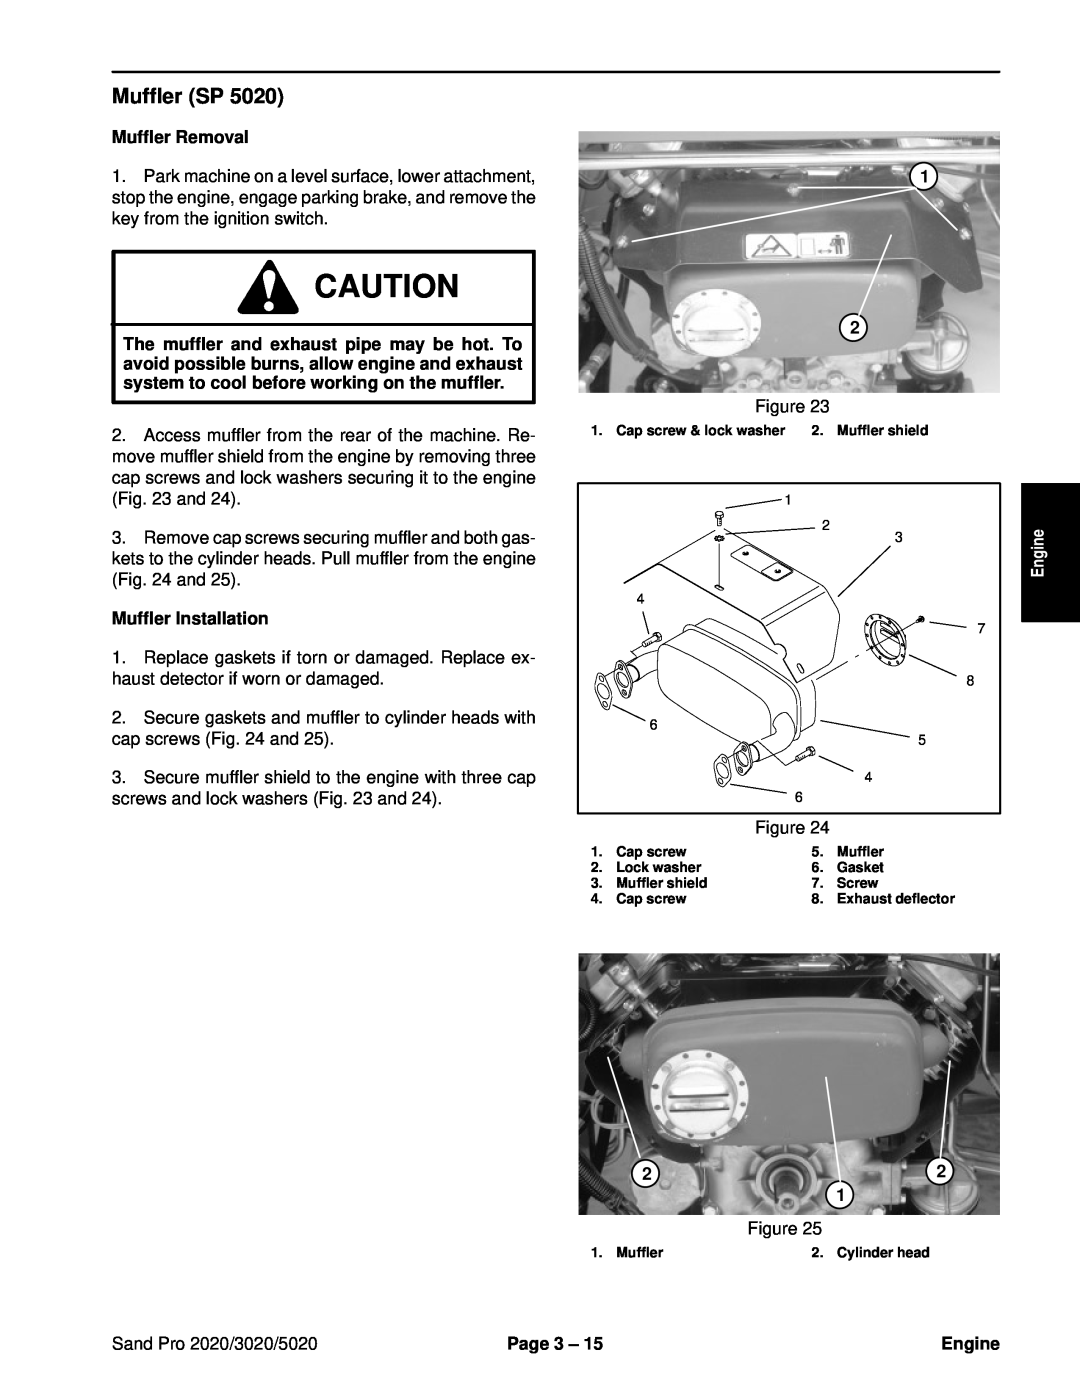 Toro service manual Muffler SP, Muffler Removal, Muffler Installation, Engine, Sand Pro 2020/3020/5020, Page 3 